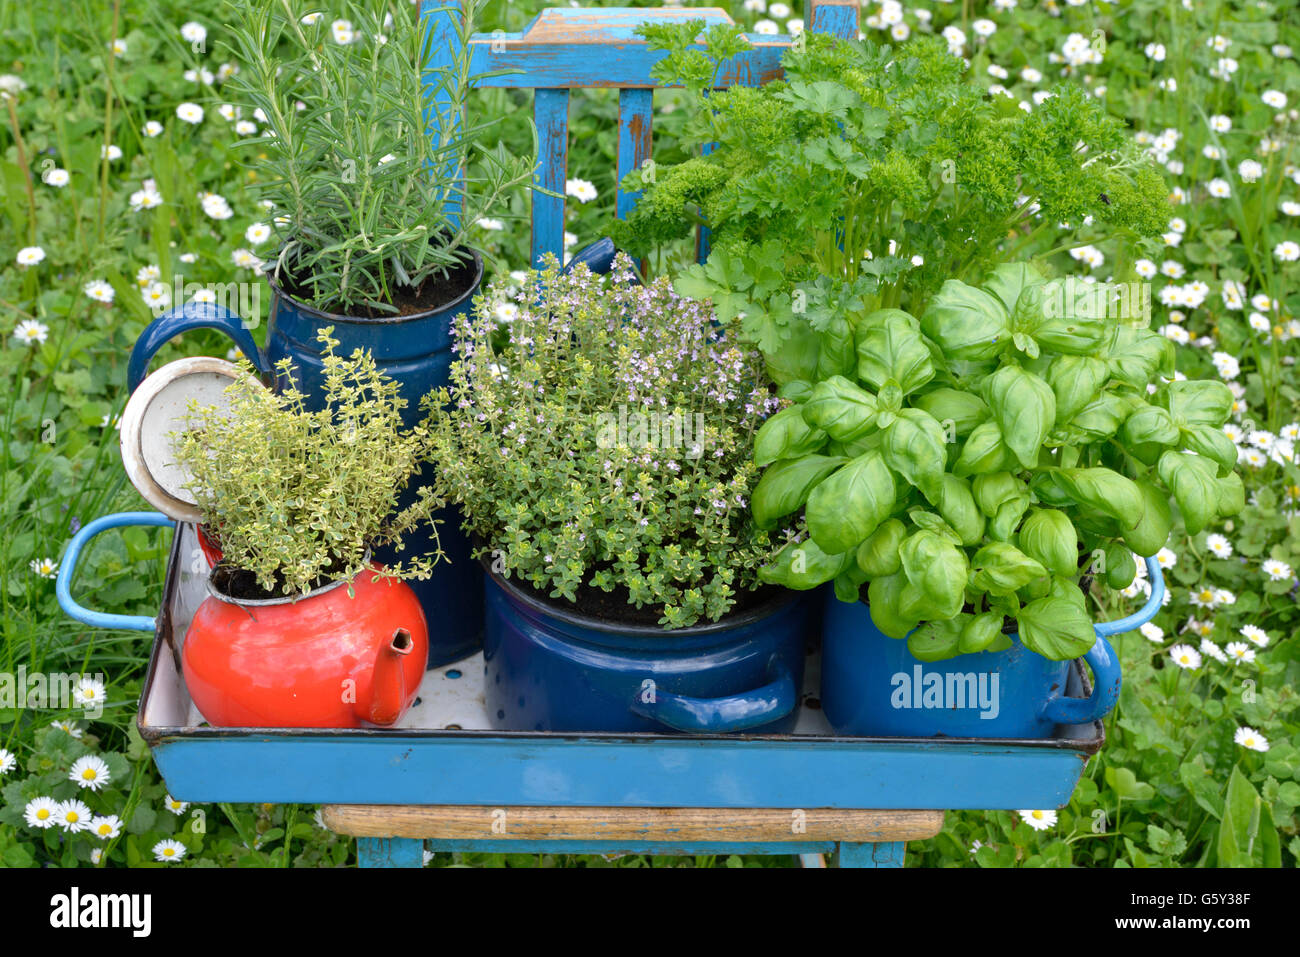 Different herbs in old bowls and cups, parsley, rosemary, basil, thyme, garden cress / (Lepidium sativum), (Thymus vulgaris), (Ocimum basilicum), (Petroselinum crispum) Stock Photo